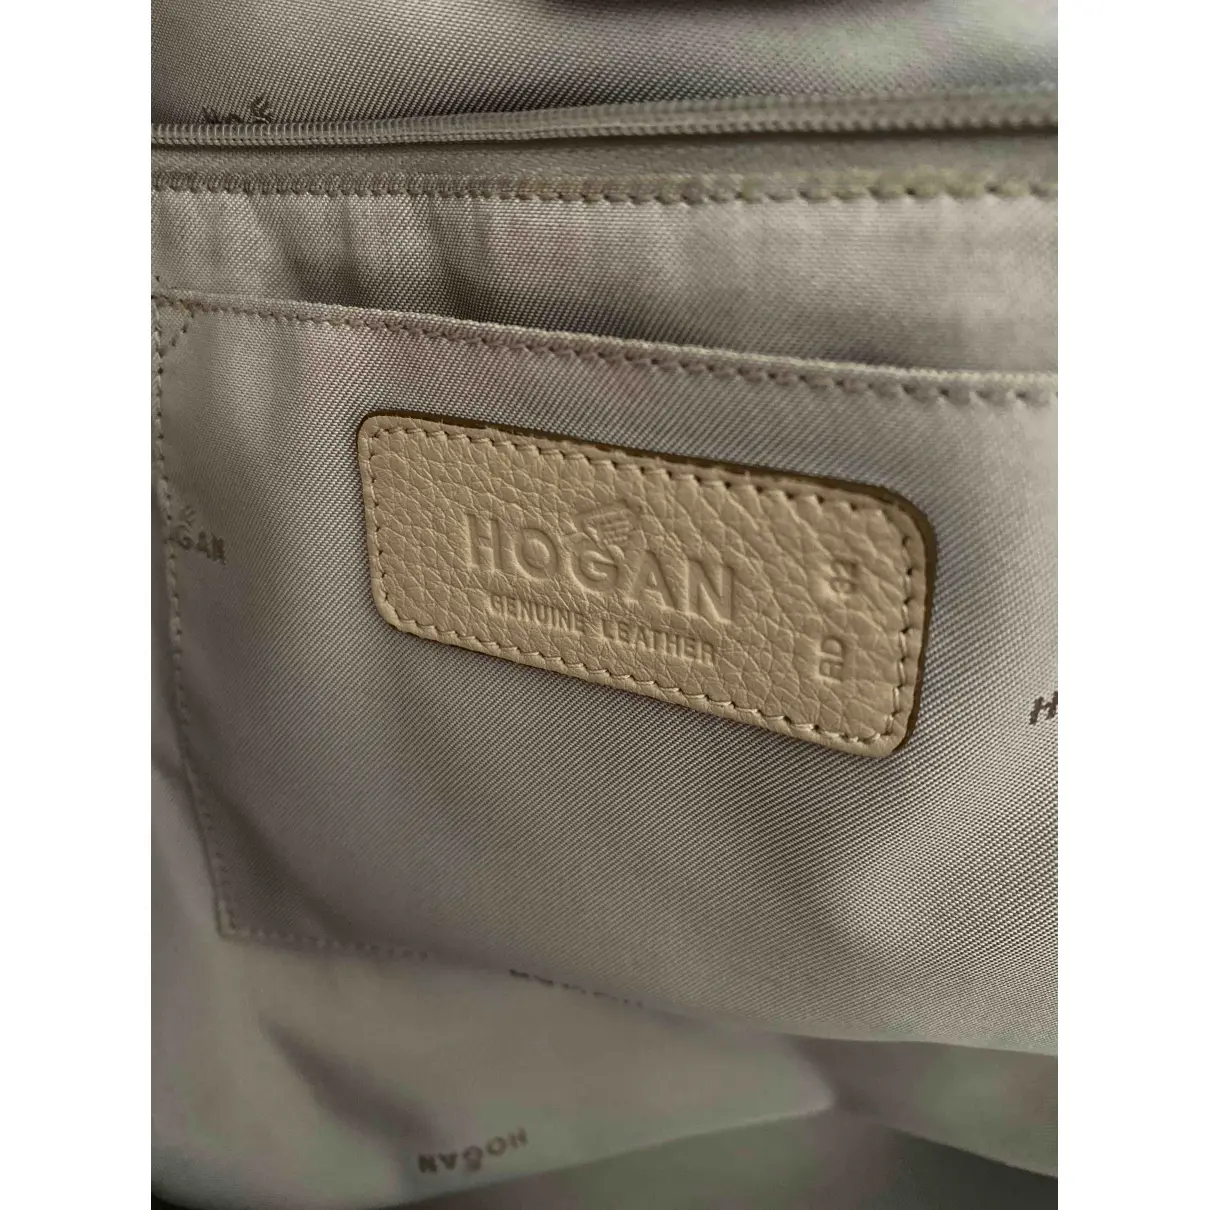 Luxury Hogan Handbags Women